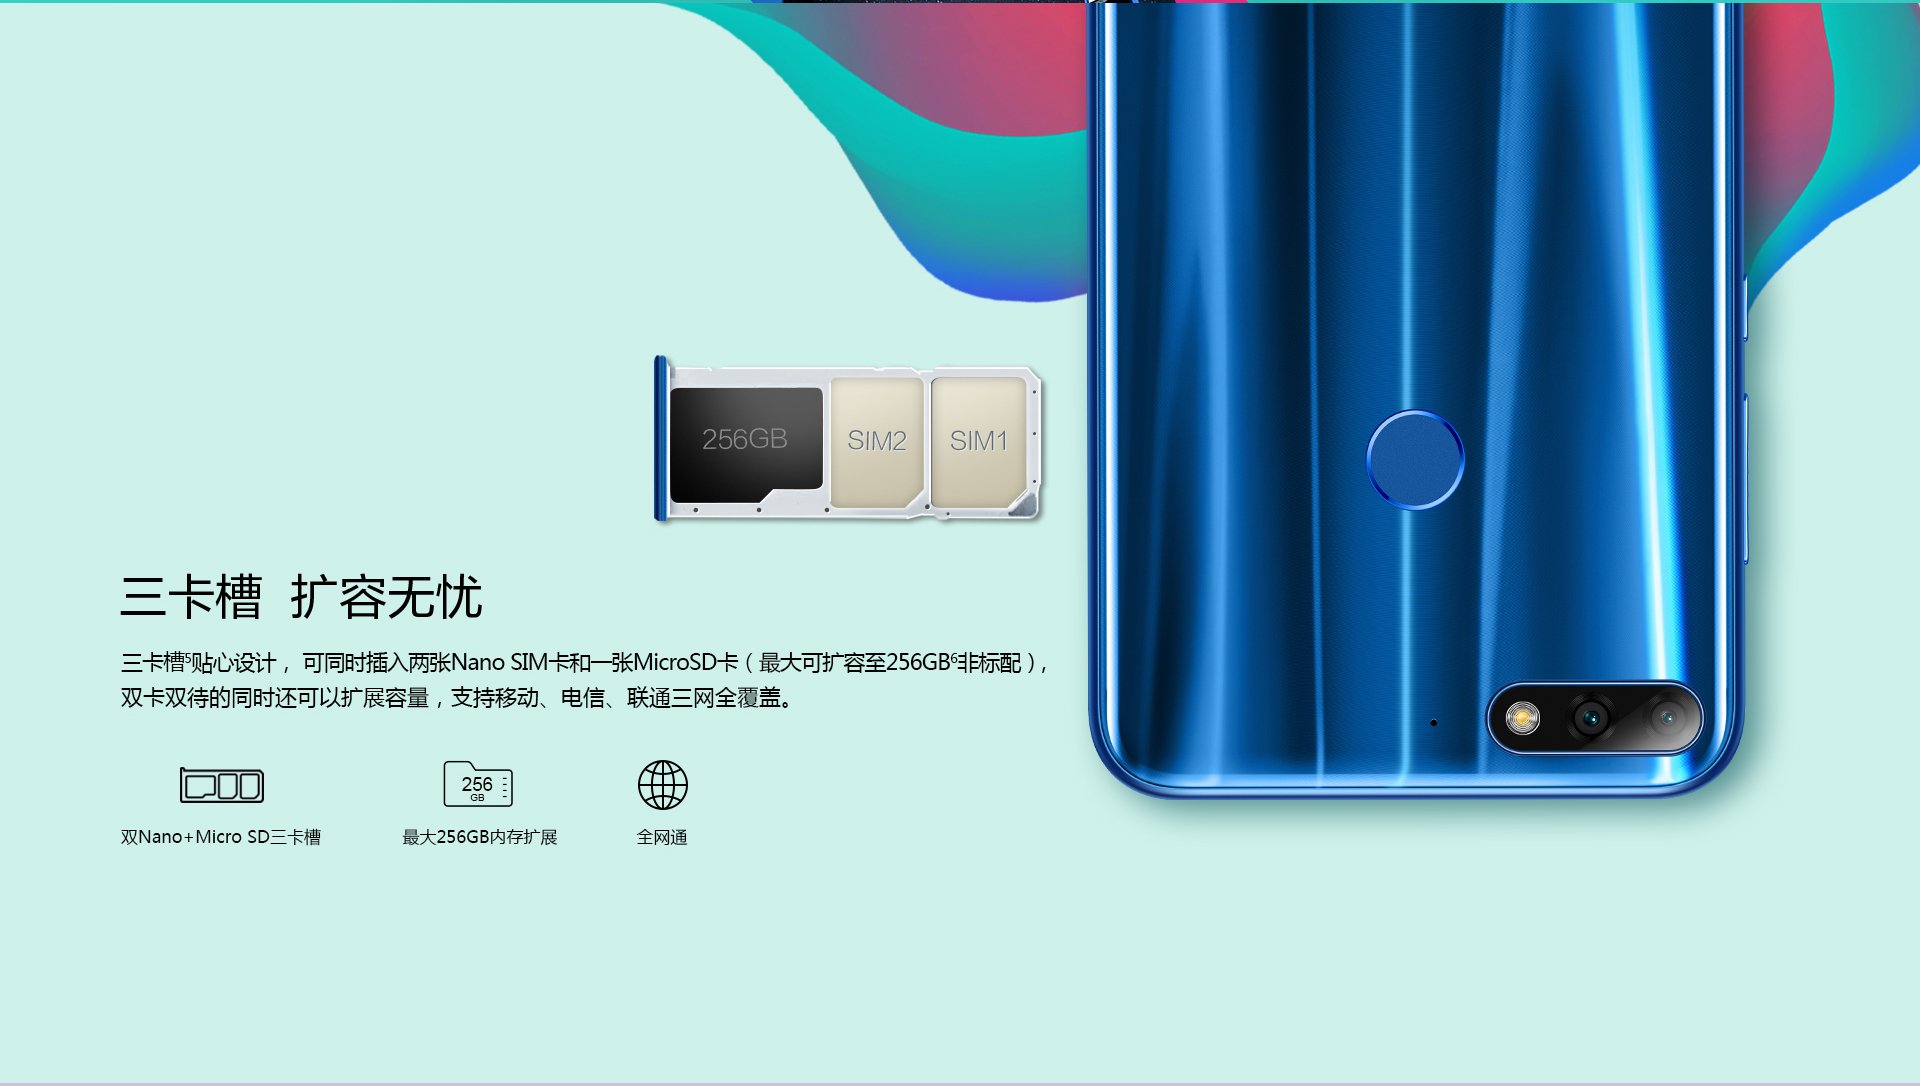 Huawei Enjoy 8 triple card slot